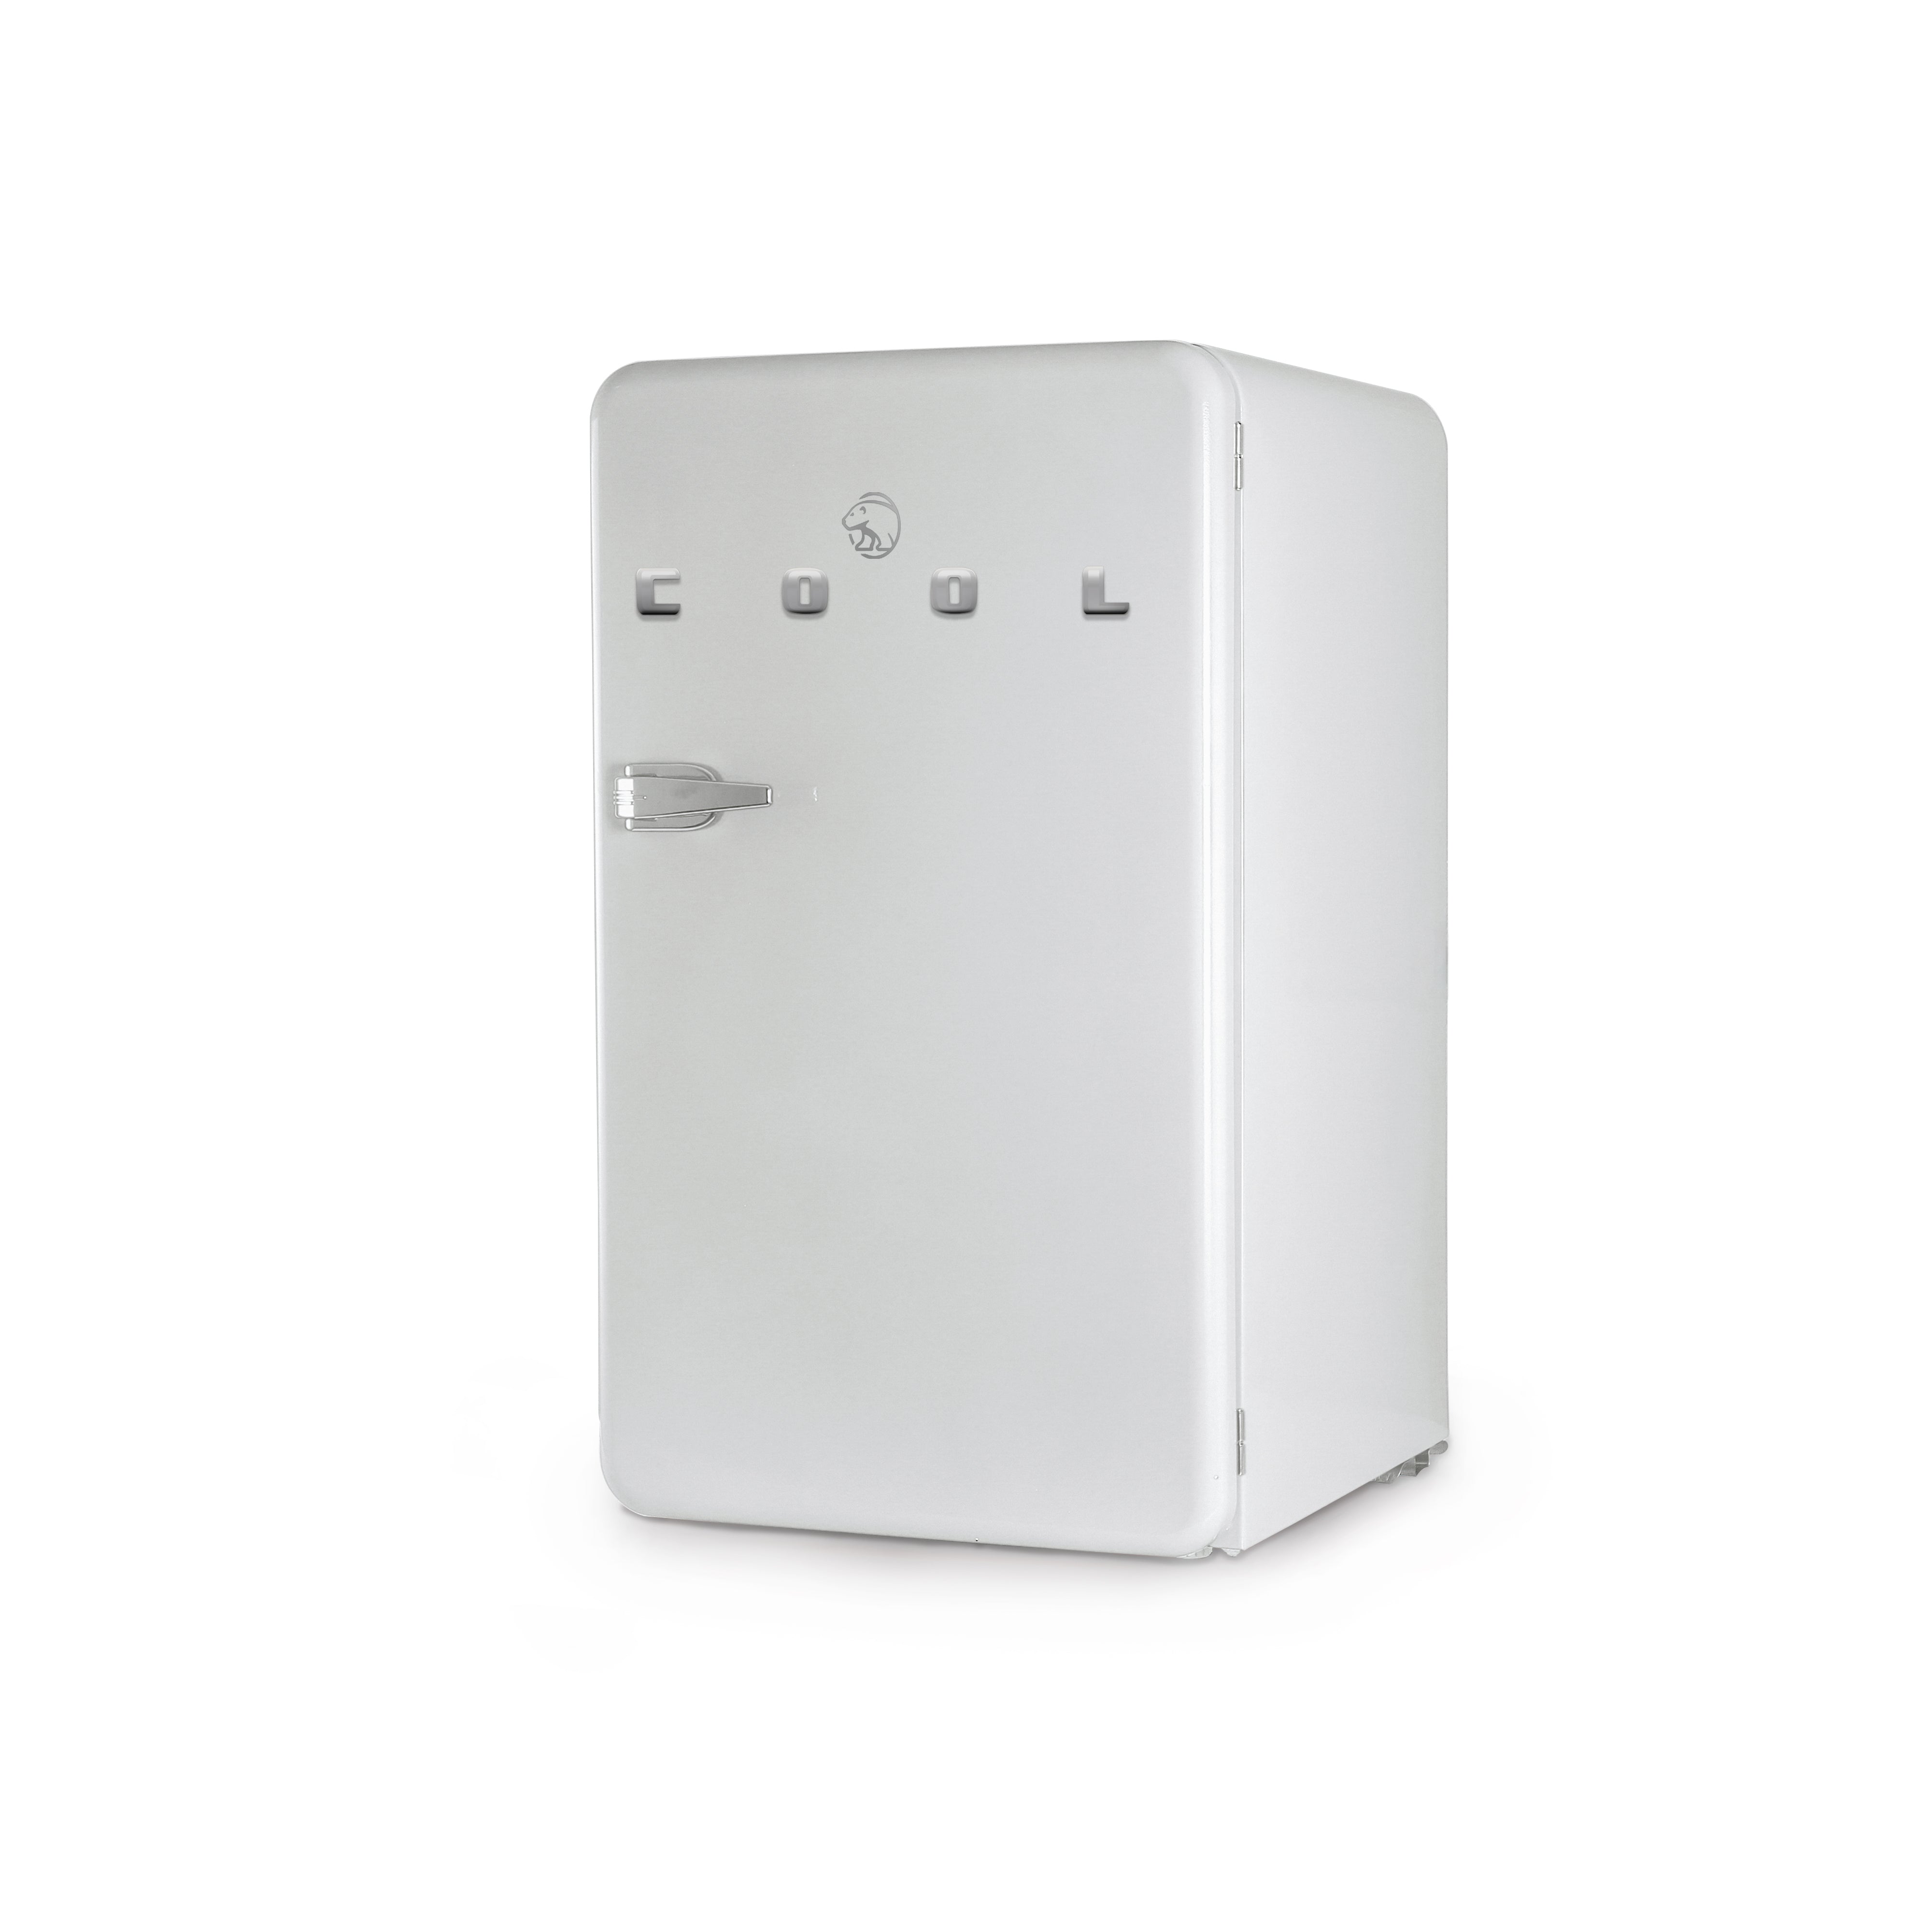 COMMERCIAL COOL Retro Refrigerator 3.2 Cu. Ft., White